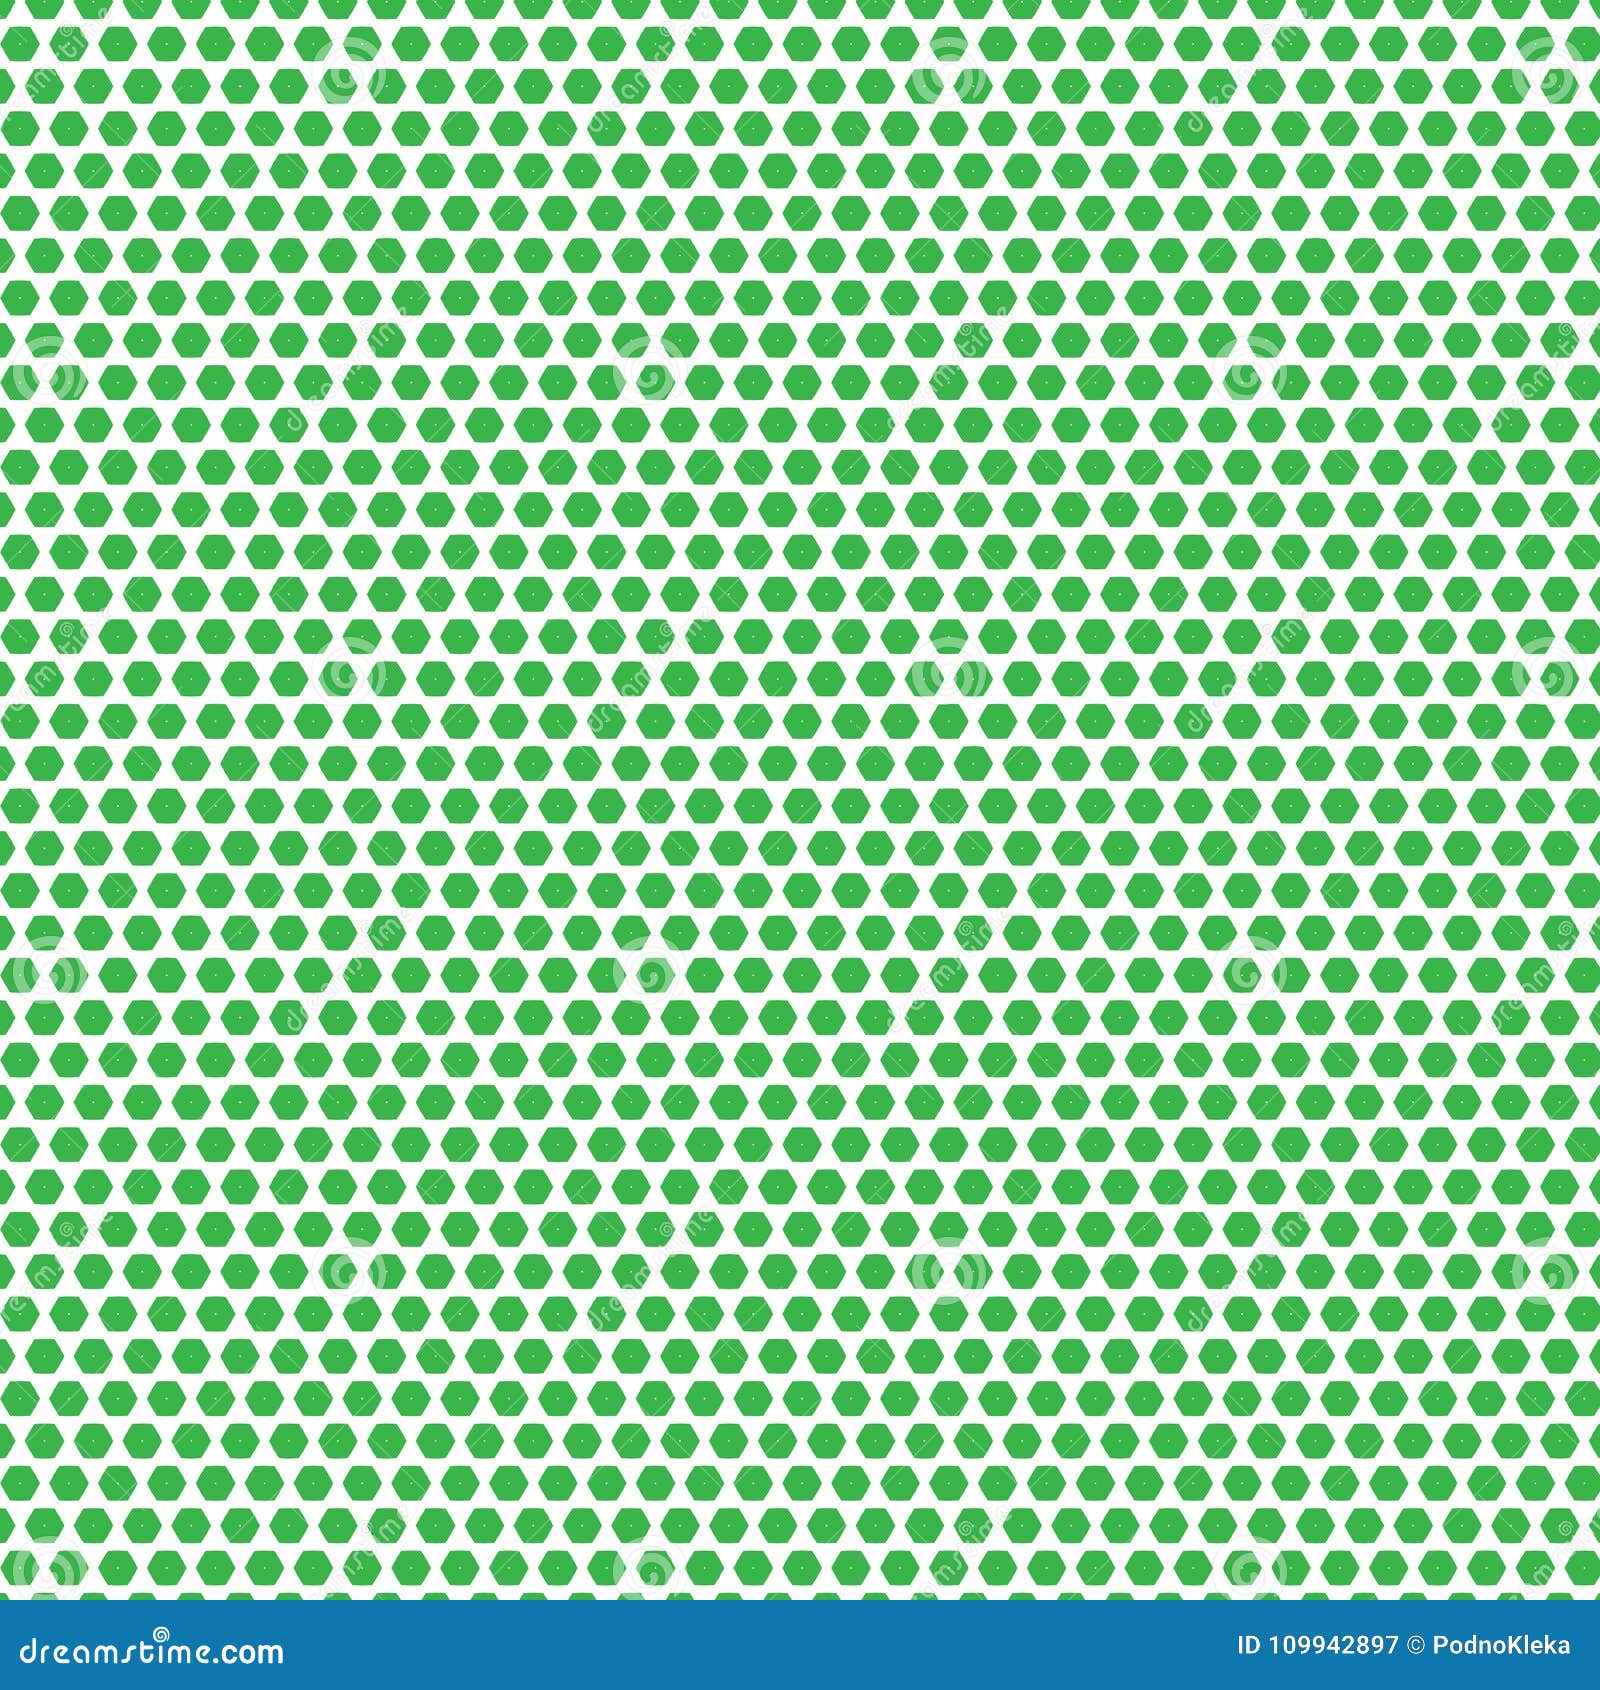 Green Hexagonal Geometric Pattern Fabric Background Stock Vector ...